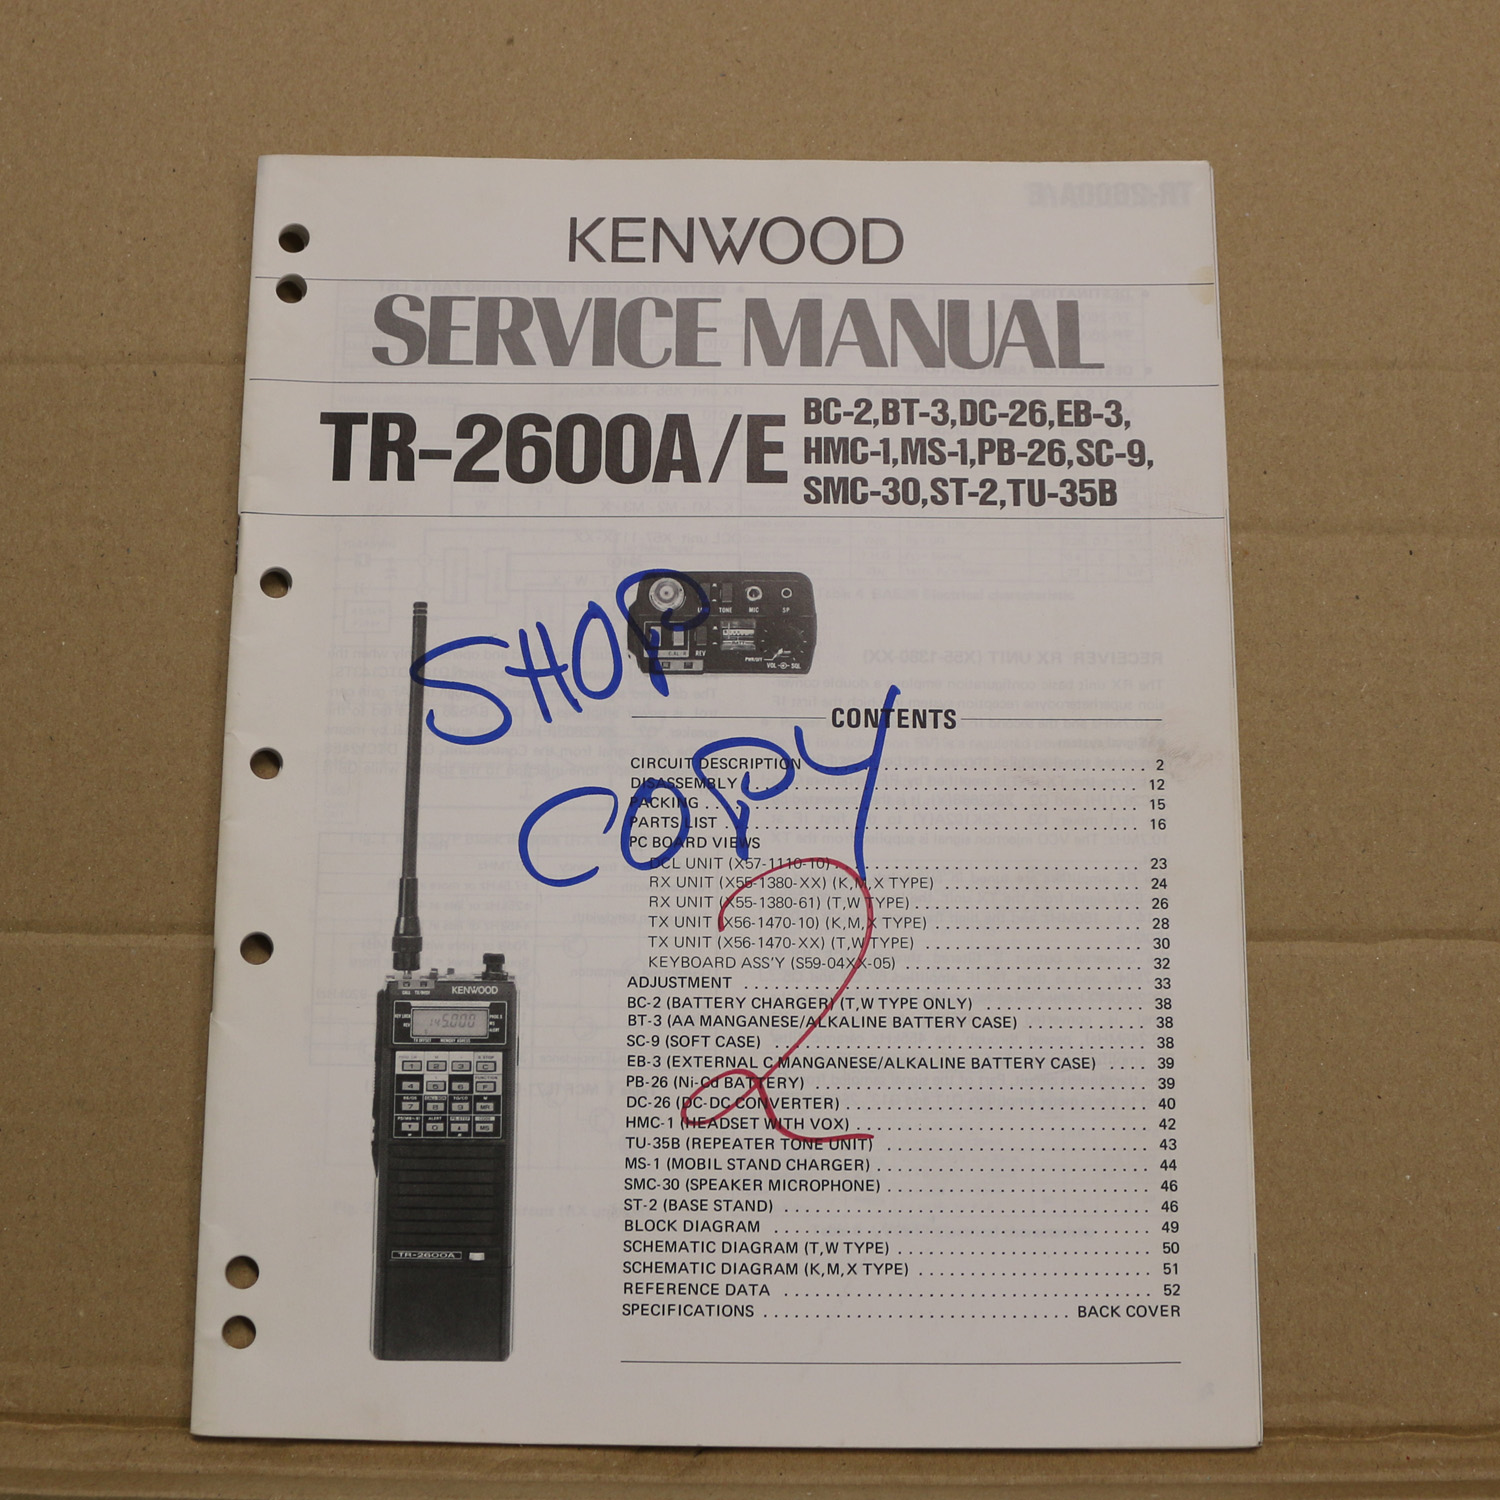 Kenwood TR-2600A/E Service Manual